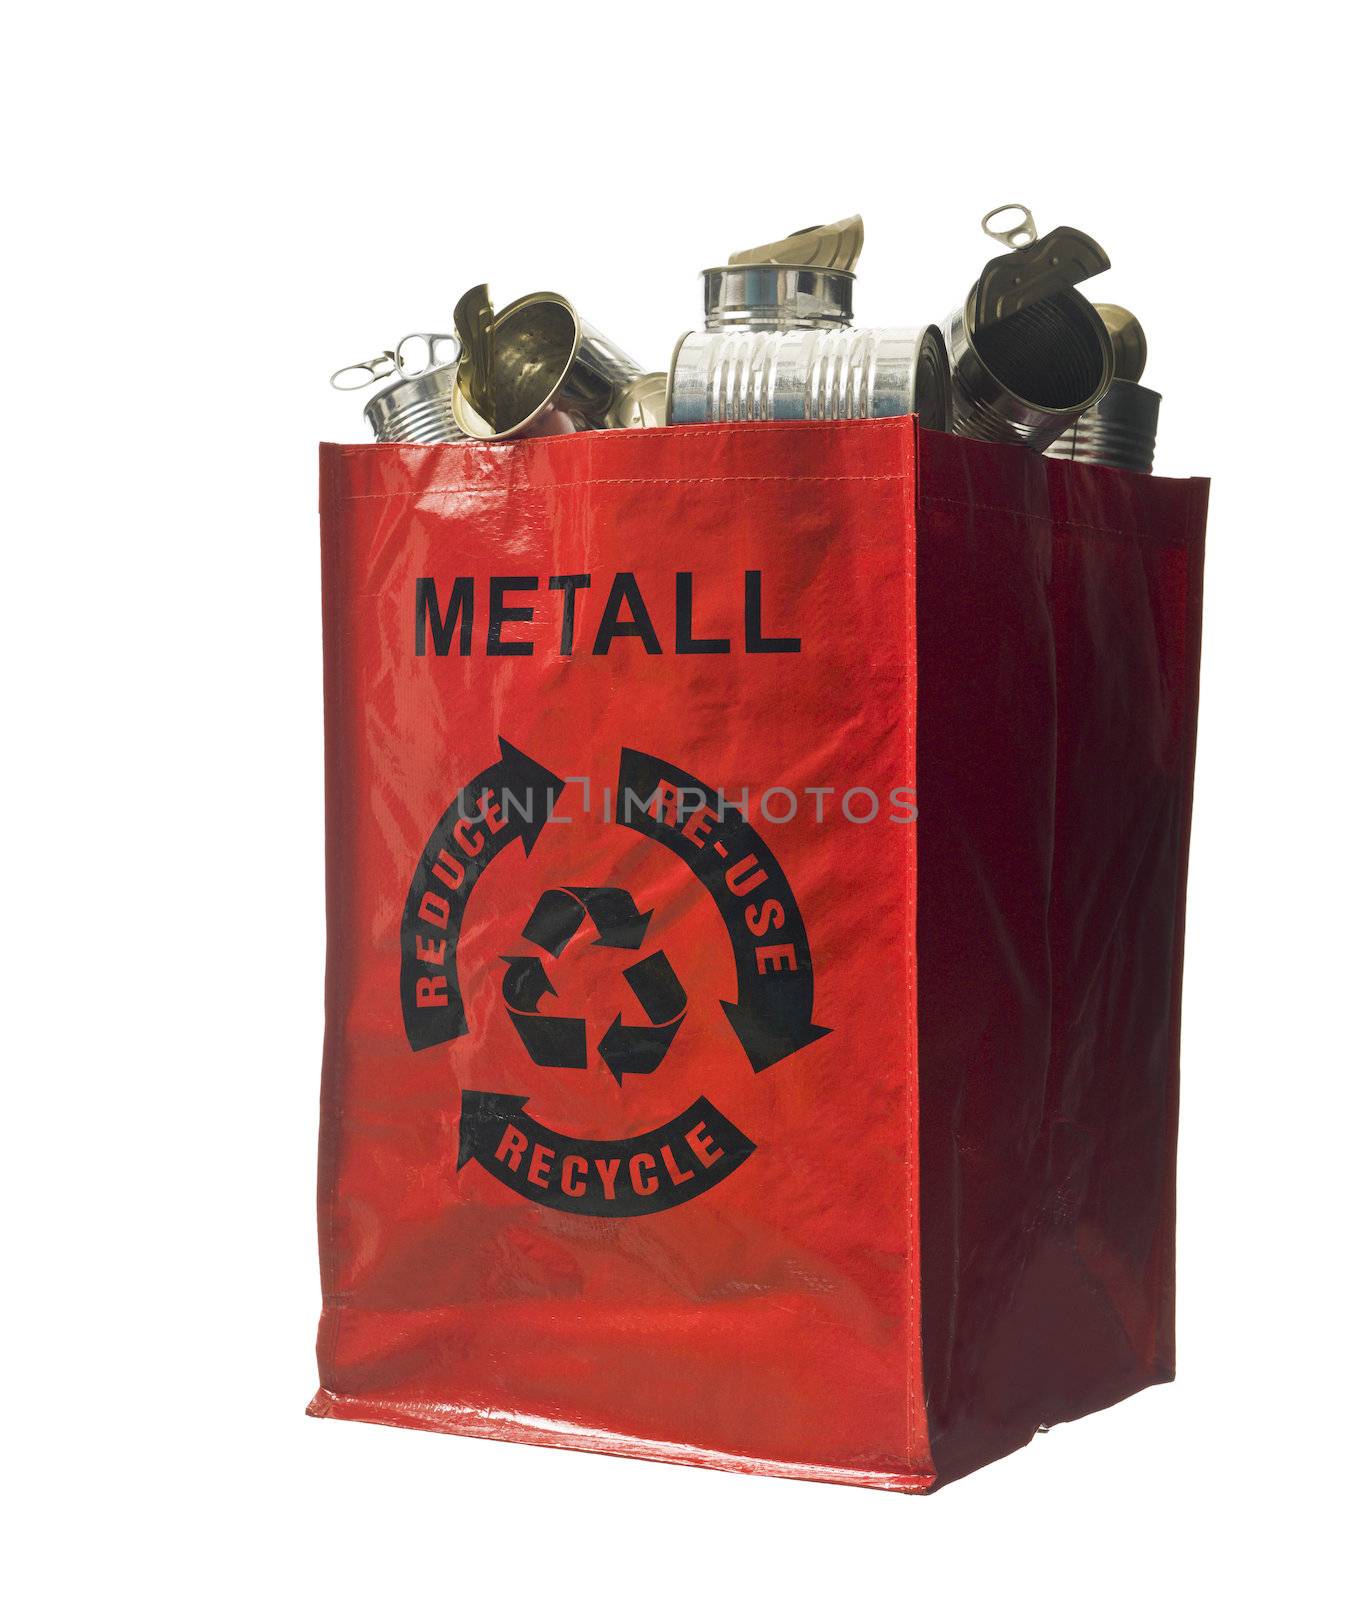 Methal Recycling by gemenacom